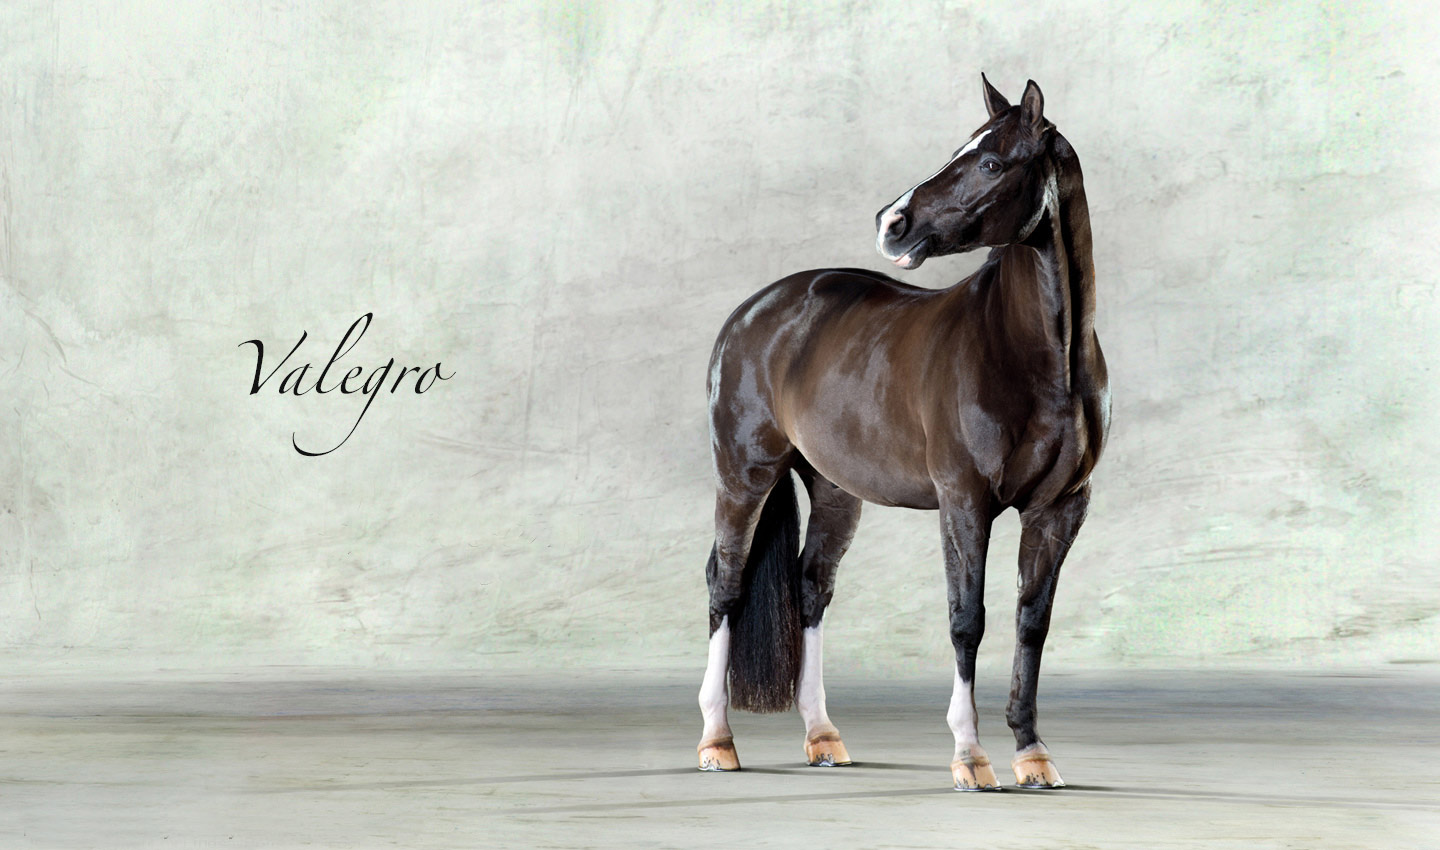 Valegreo_Olympic_Gold_Medal_Dressage_Horse-animal-equestrian-portrait-photography-photographer_Lindsay_Robertson